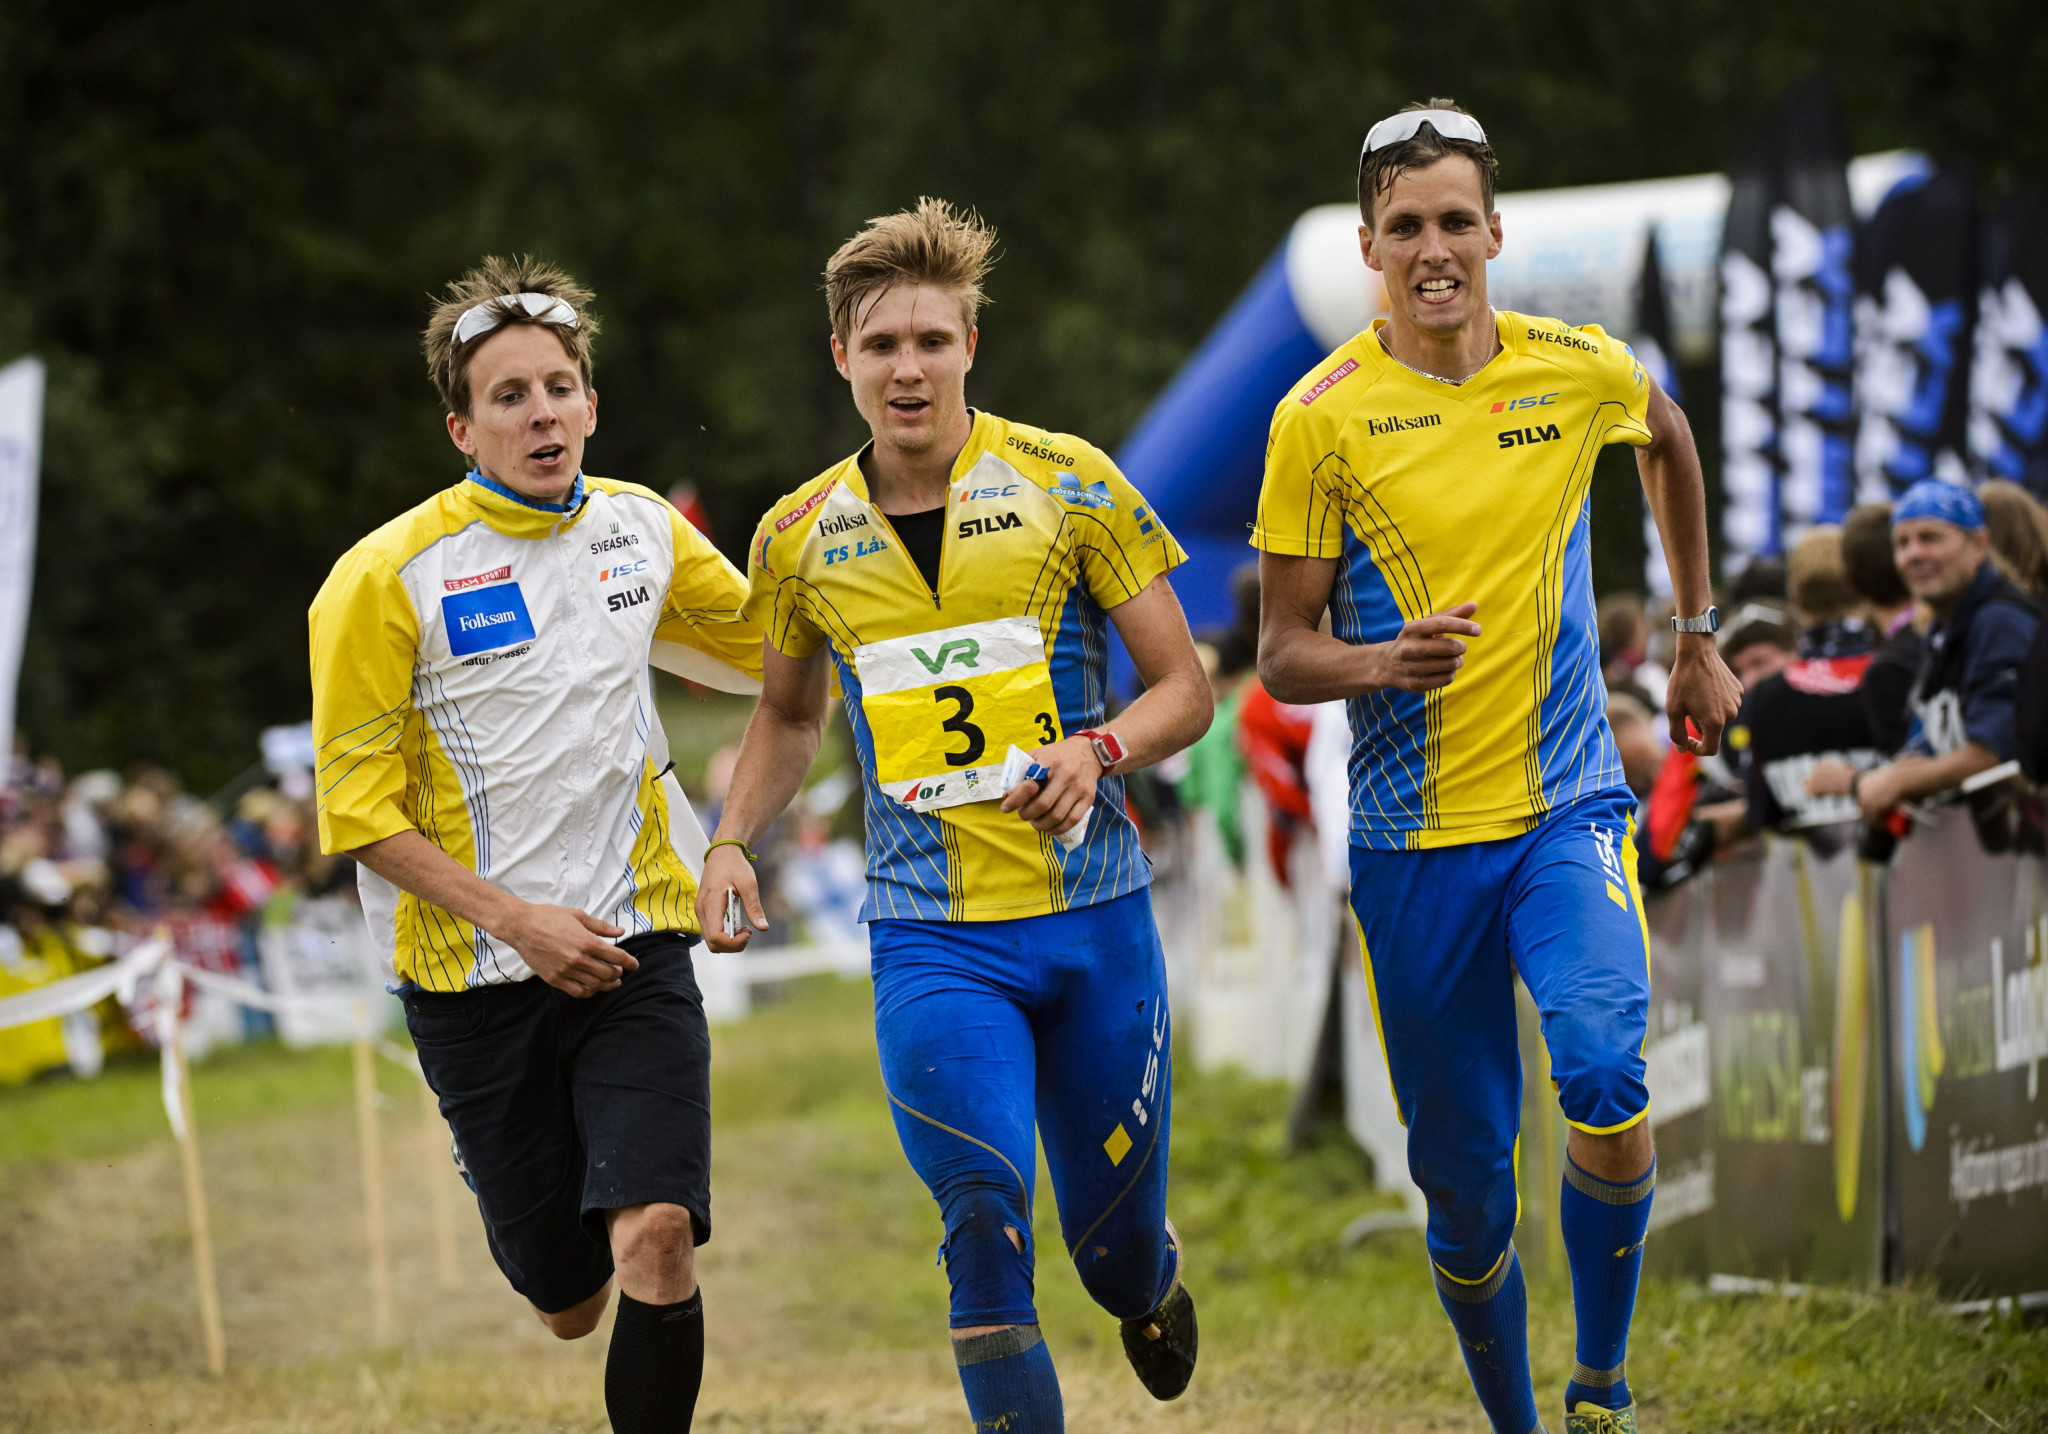 Gustav Bergman, centre, led Sweden home for gold in the men's race ©Getty Images